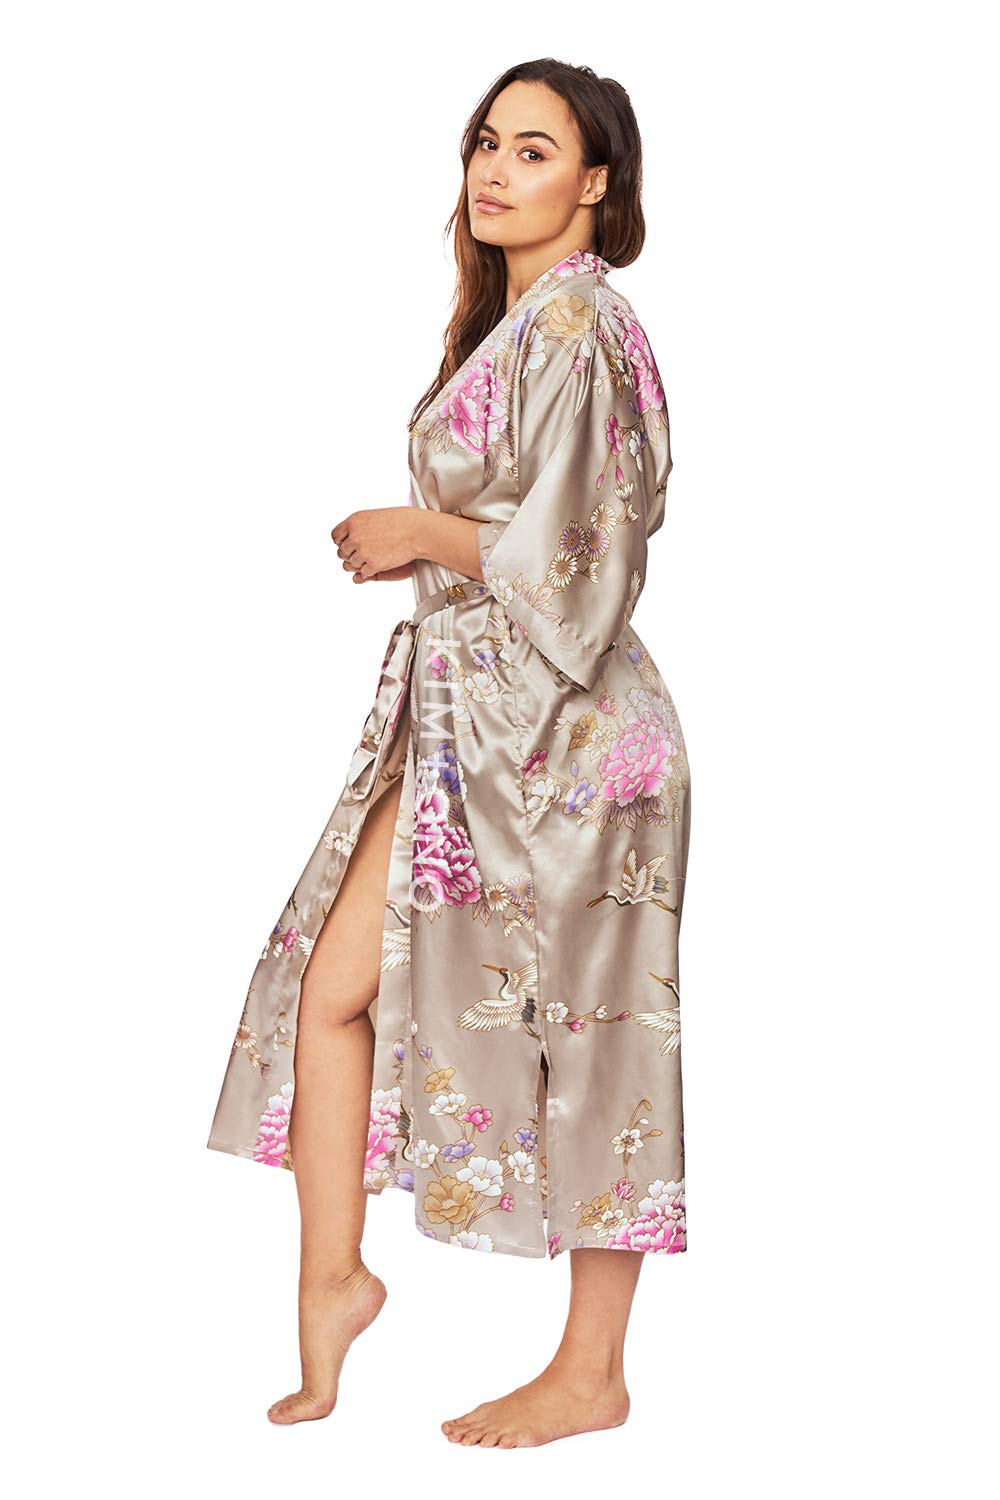 INVOLAND Women Plus Size Robes Long Sleeve Bath Robe Knit Bathrobe Soft Sleepwear Ladies Nightwear 18W-26W 